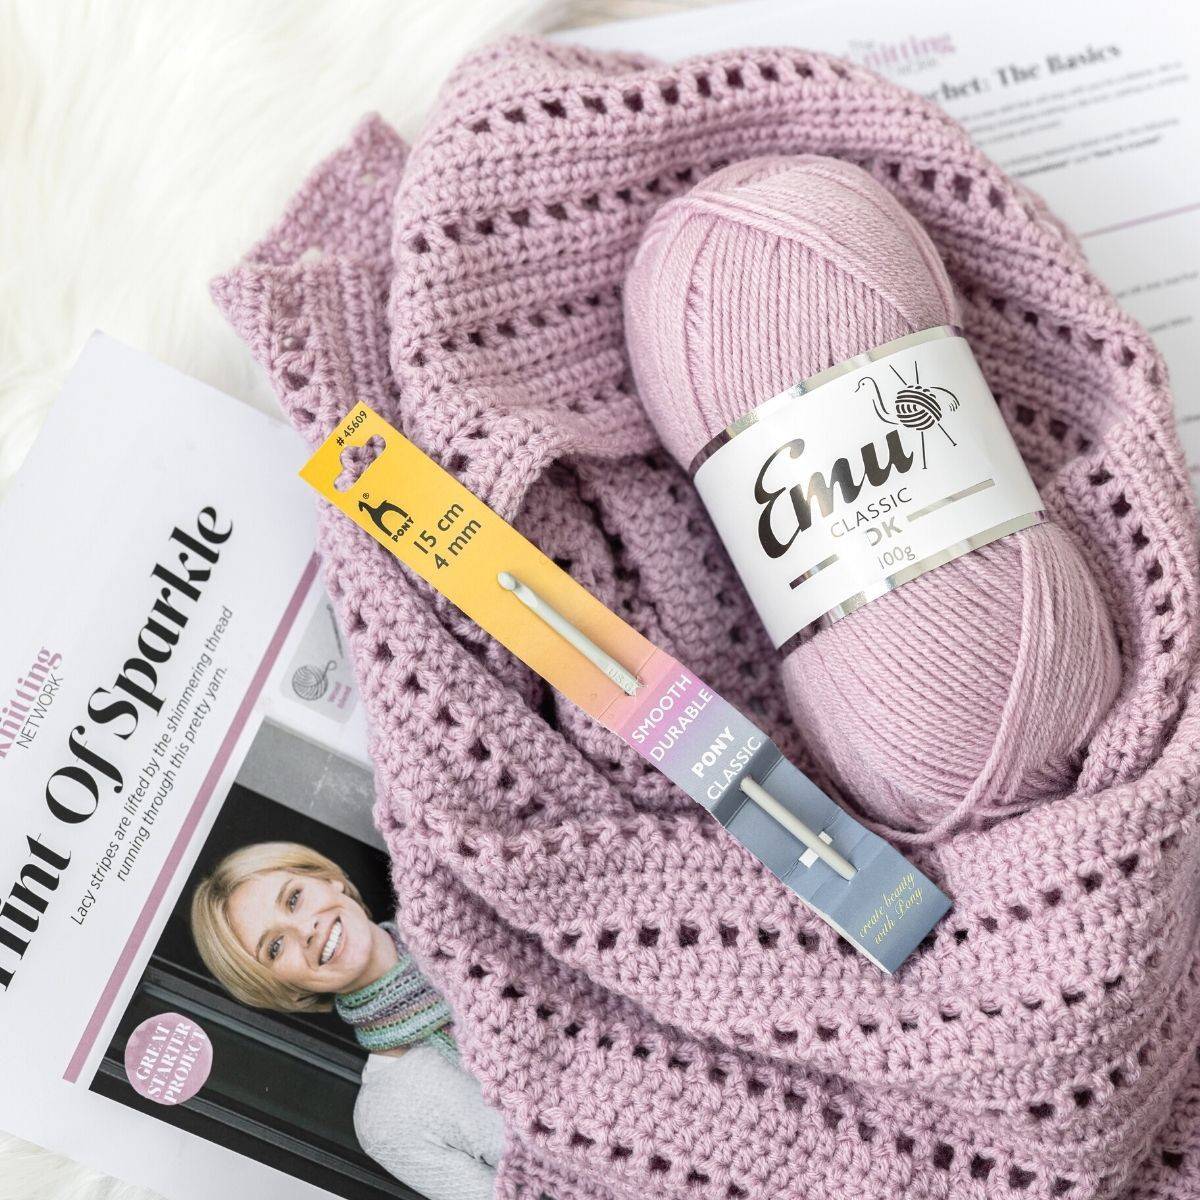 Sleepytime Snugglies Crochet Kit – Mary Maxim